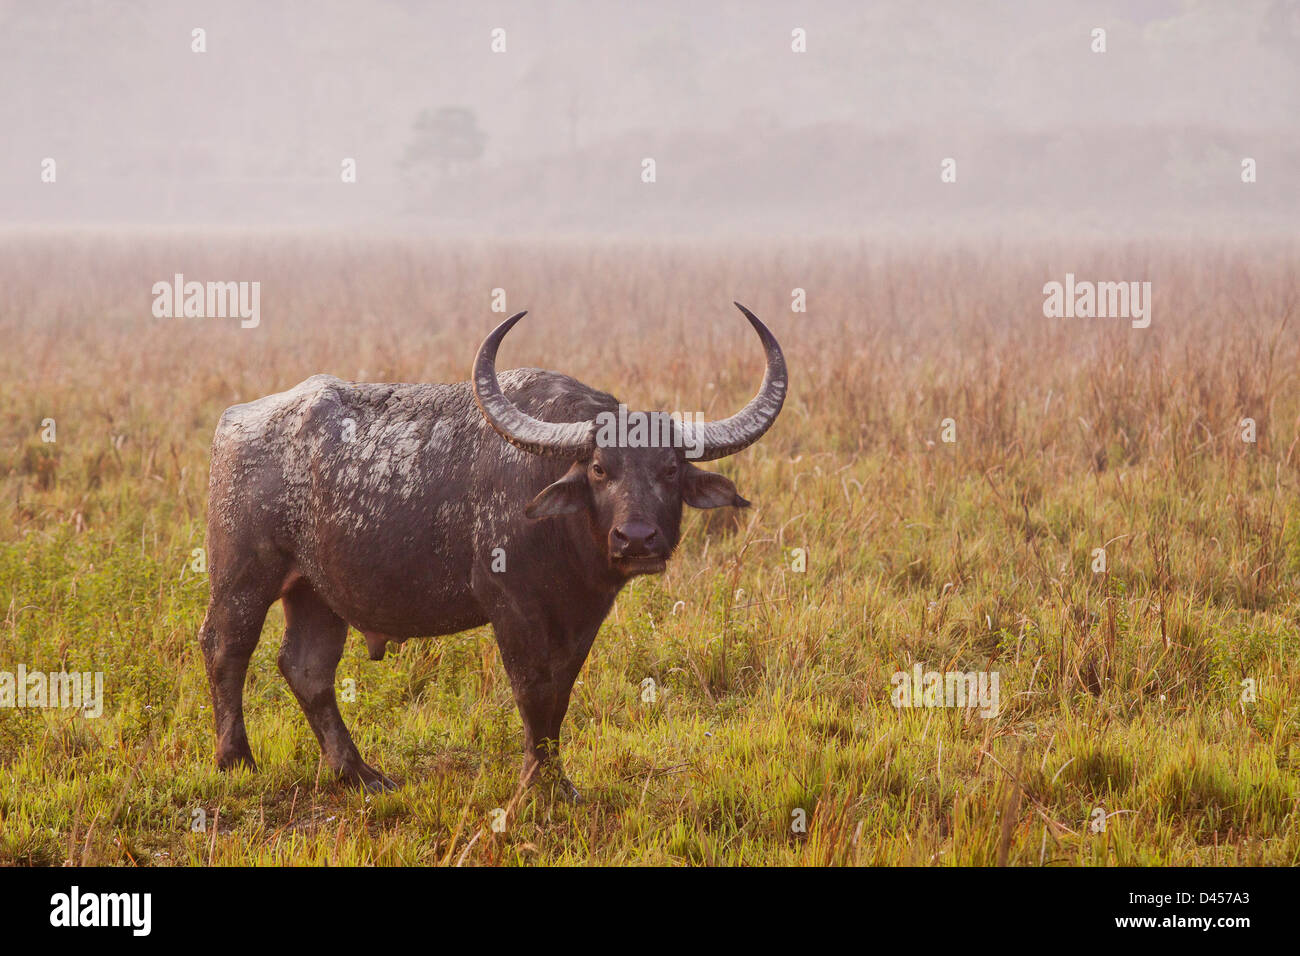 Wild buffalo in the open grassland Stock Photo